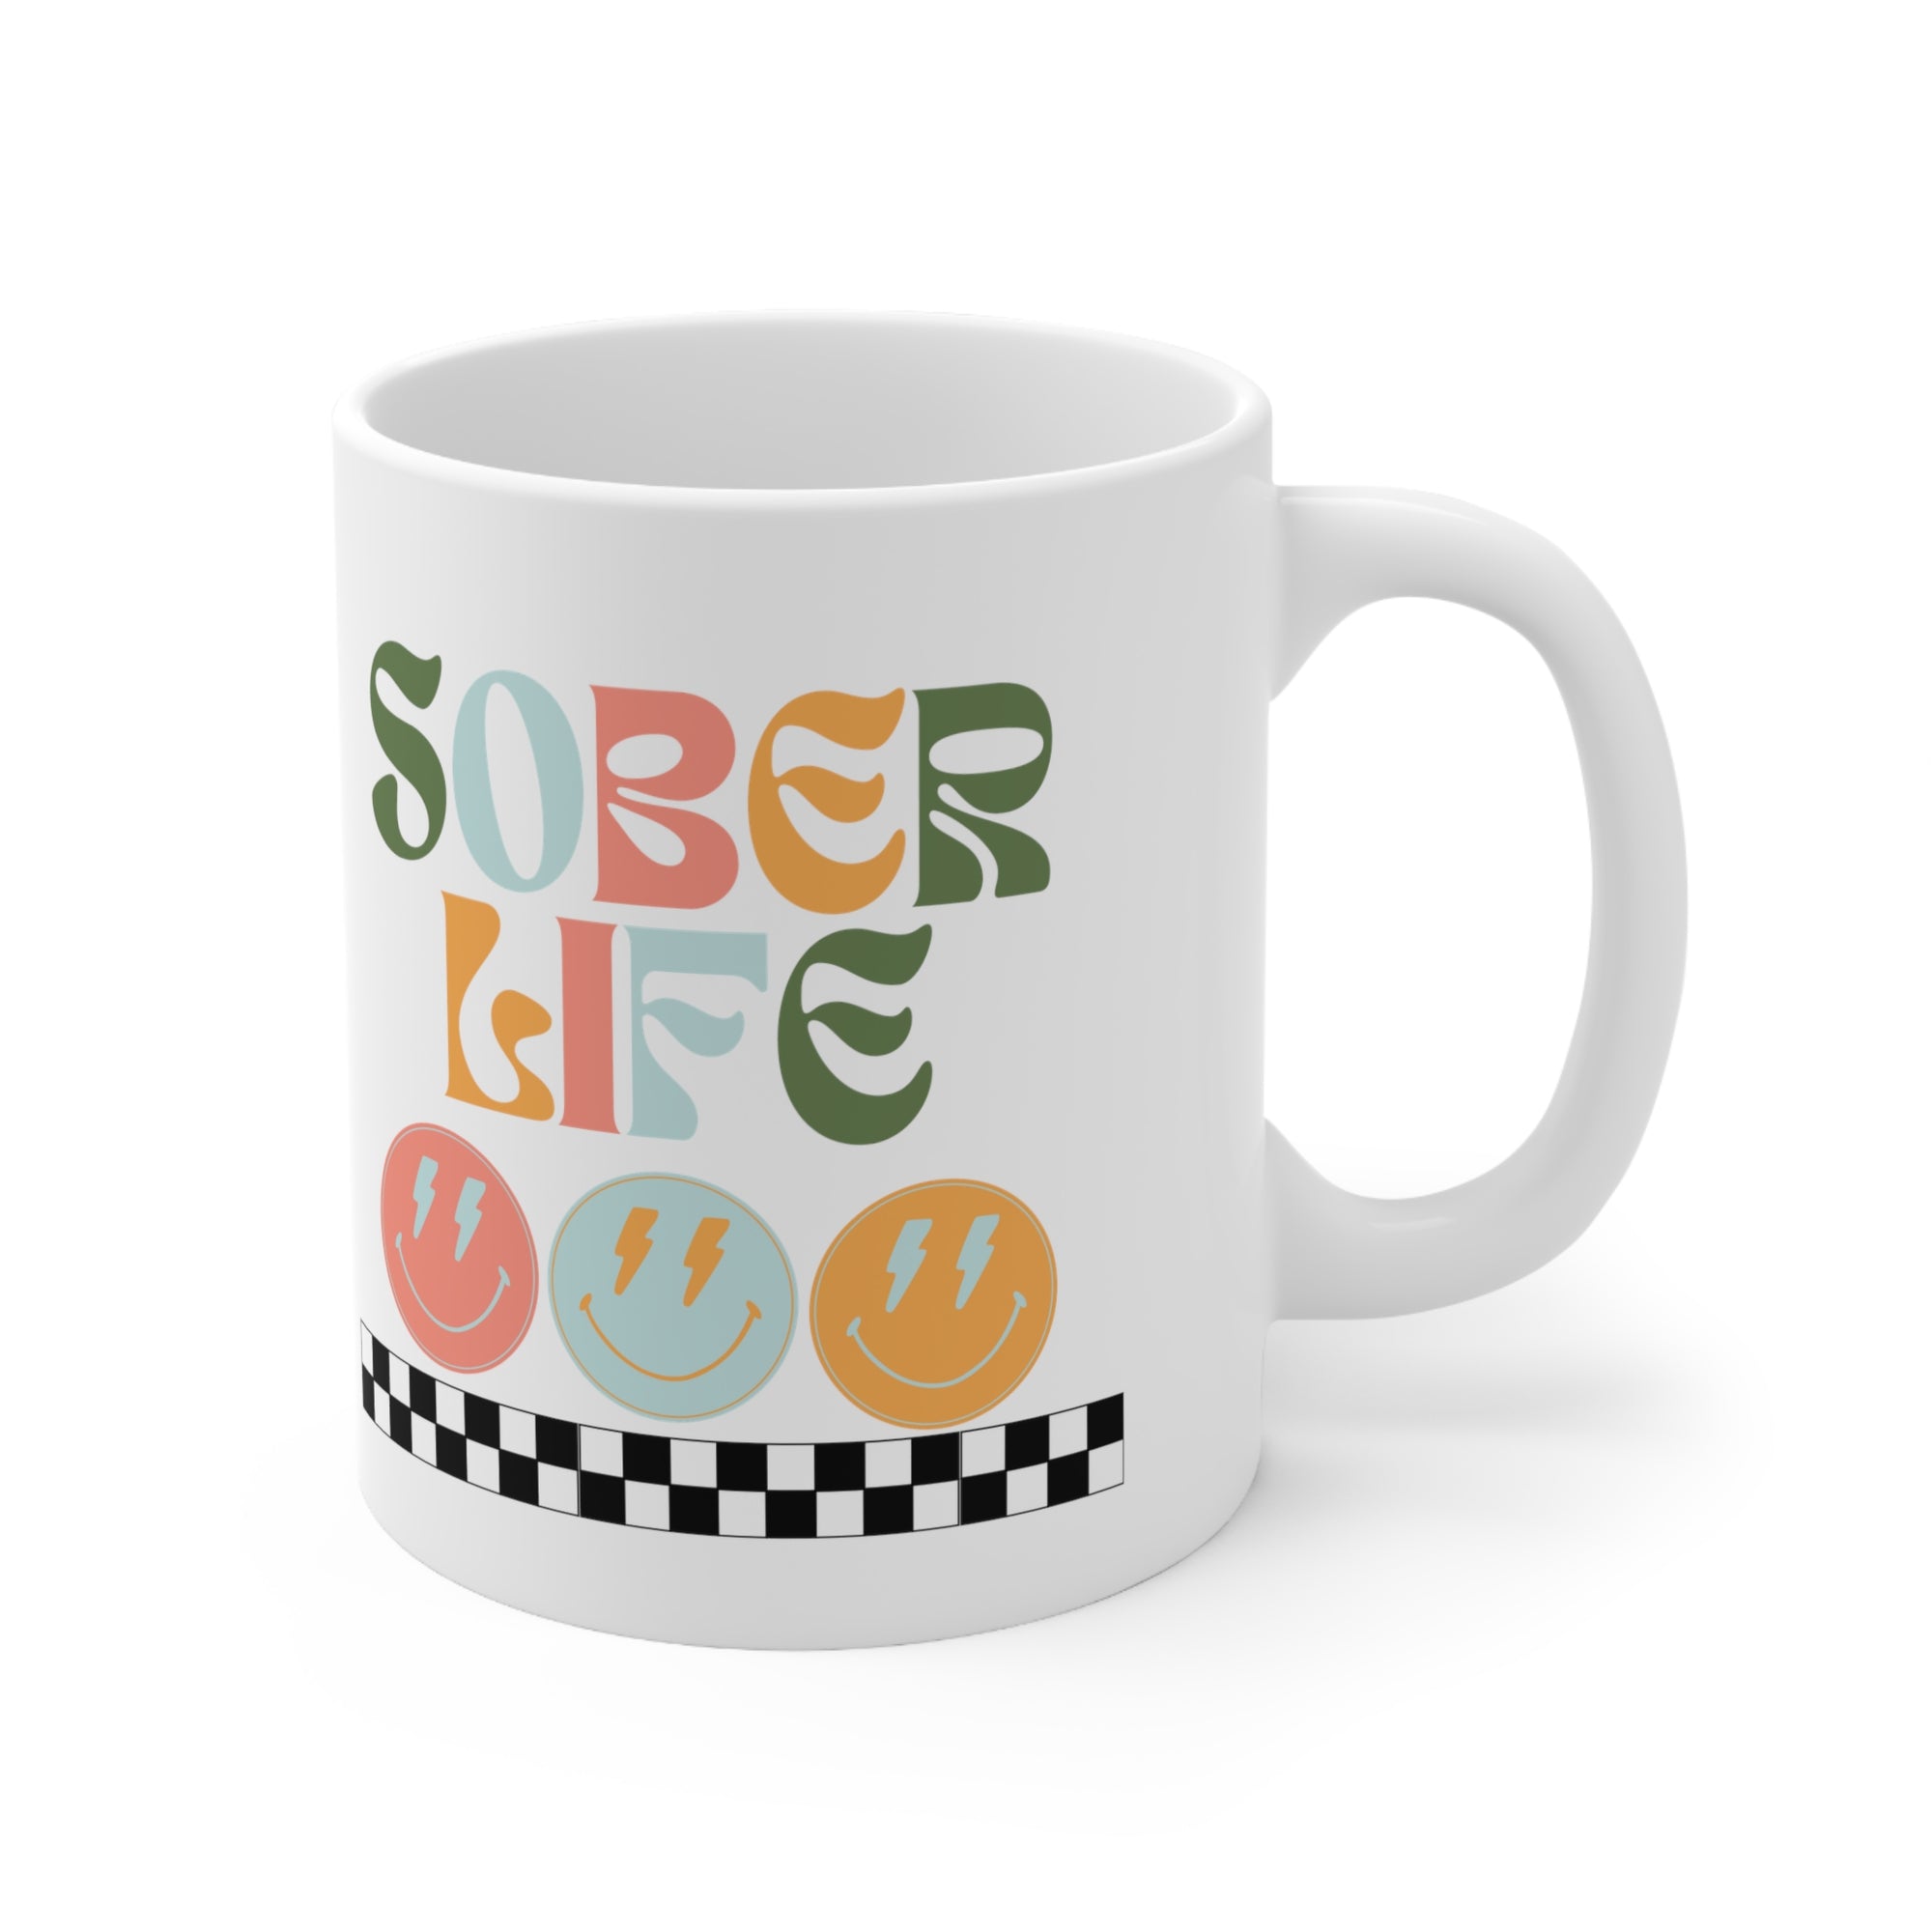 Sober Life Mug